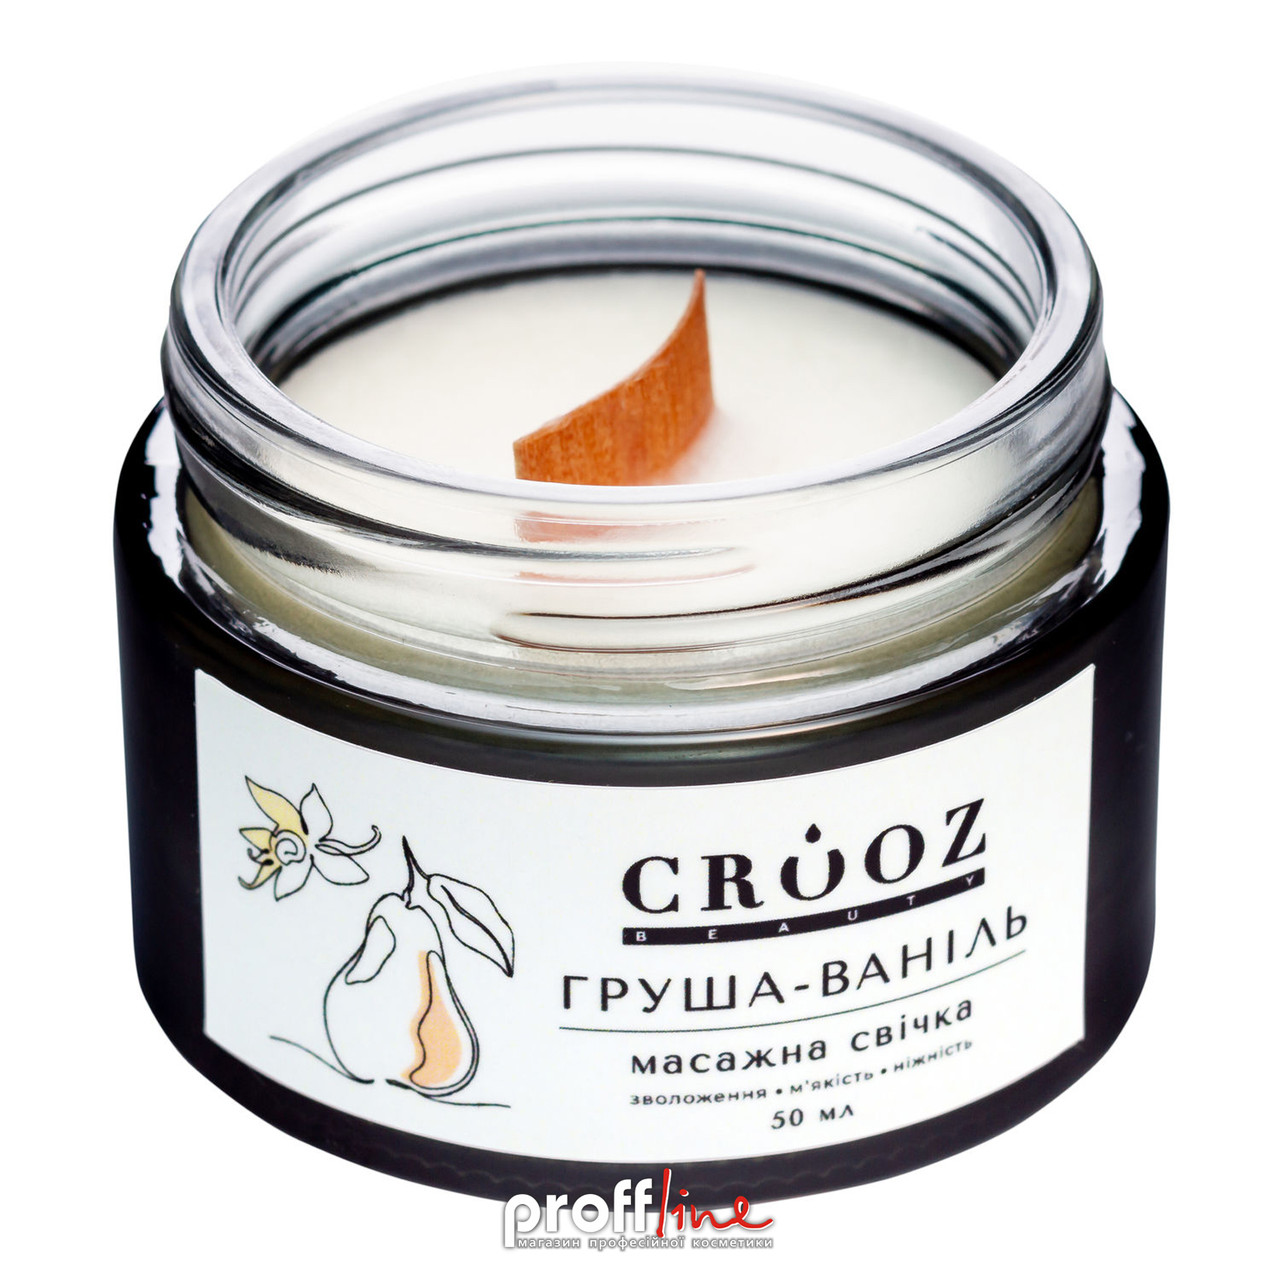 Масажна свічка Crooz із ароматом Груша-ваніль 50 мл